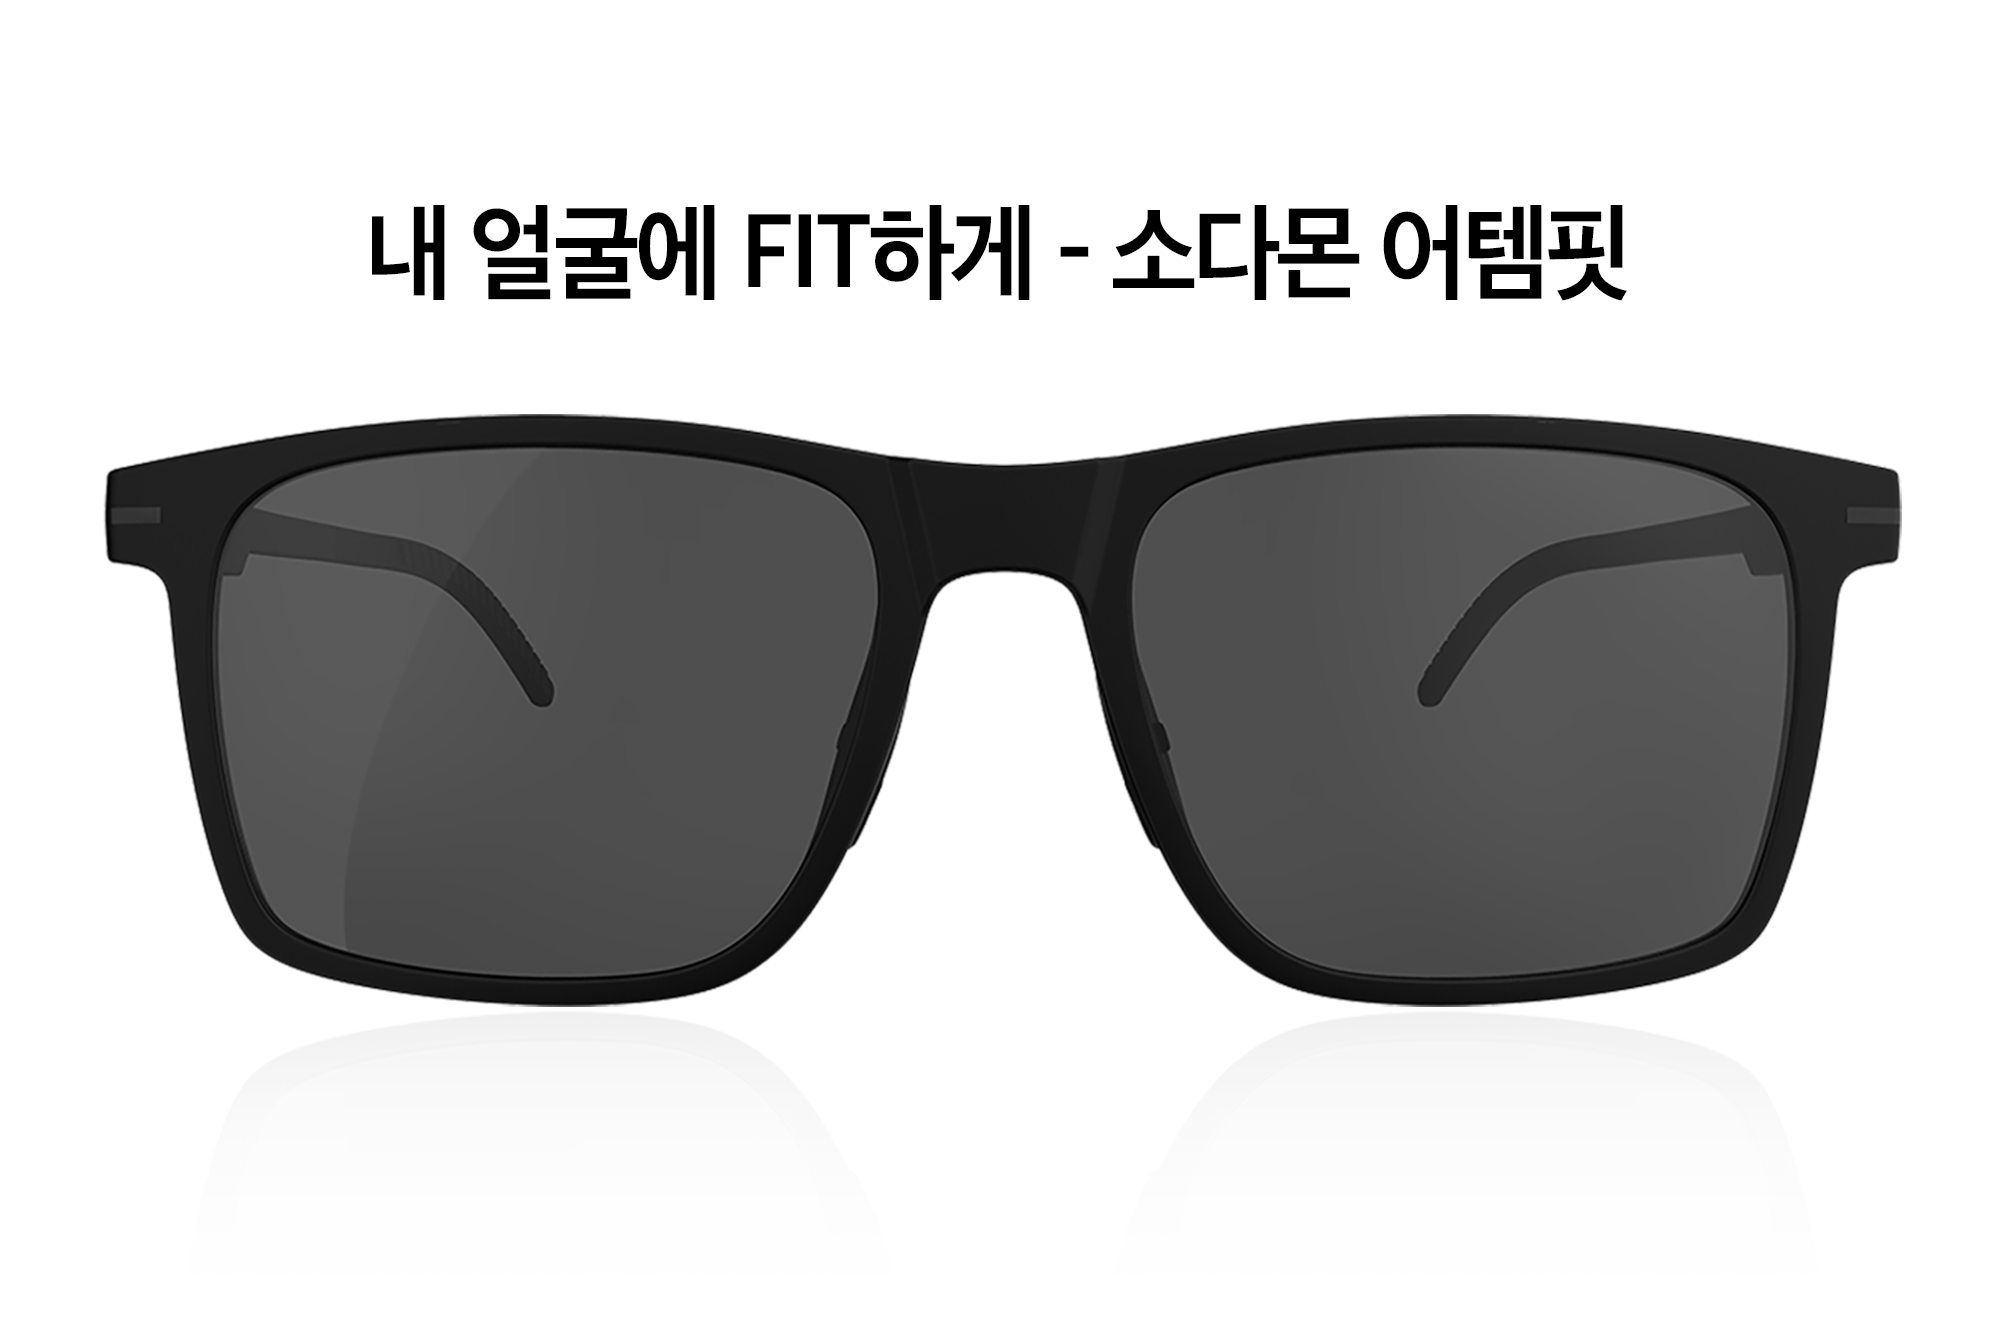 Sodamon Attem Fit ATF2103 Near-Infrared Blocking Sunglasses